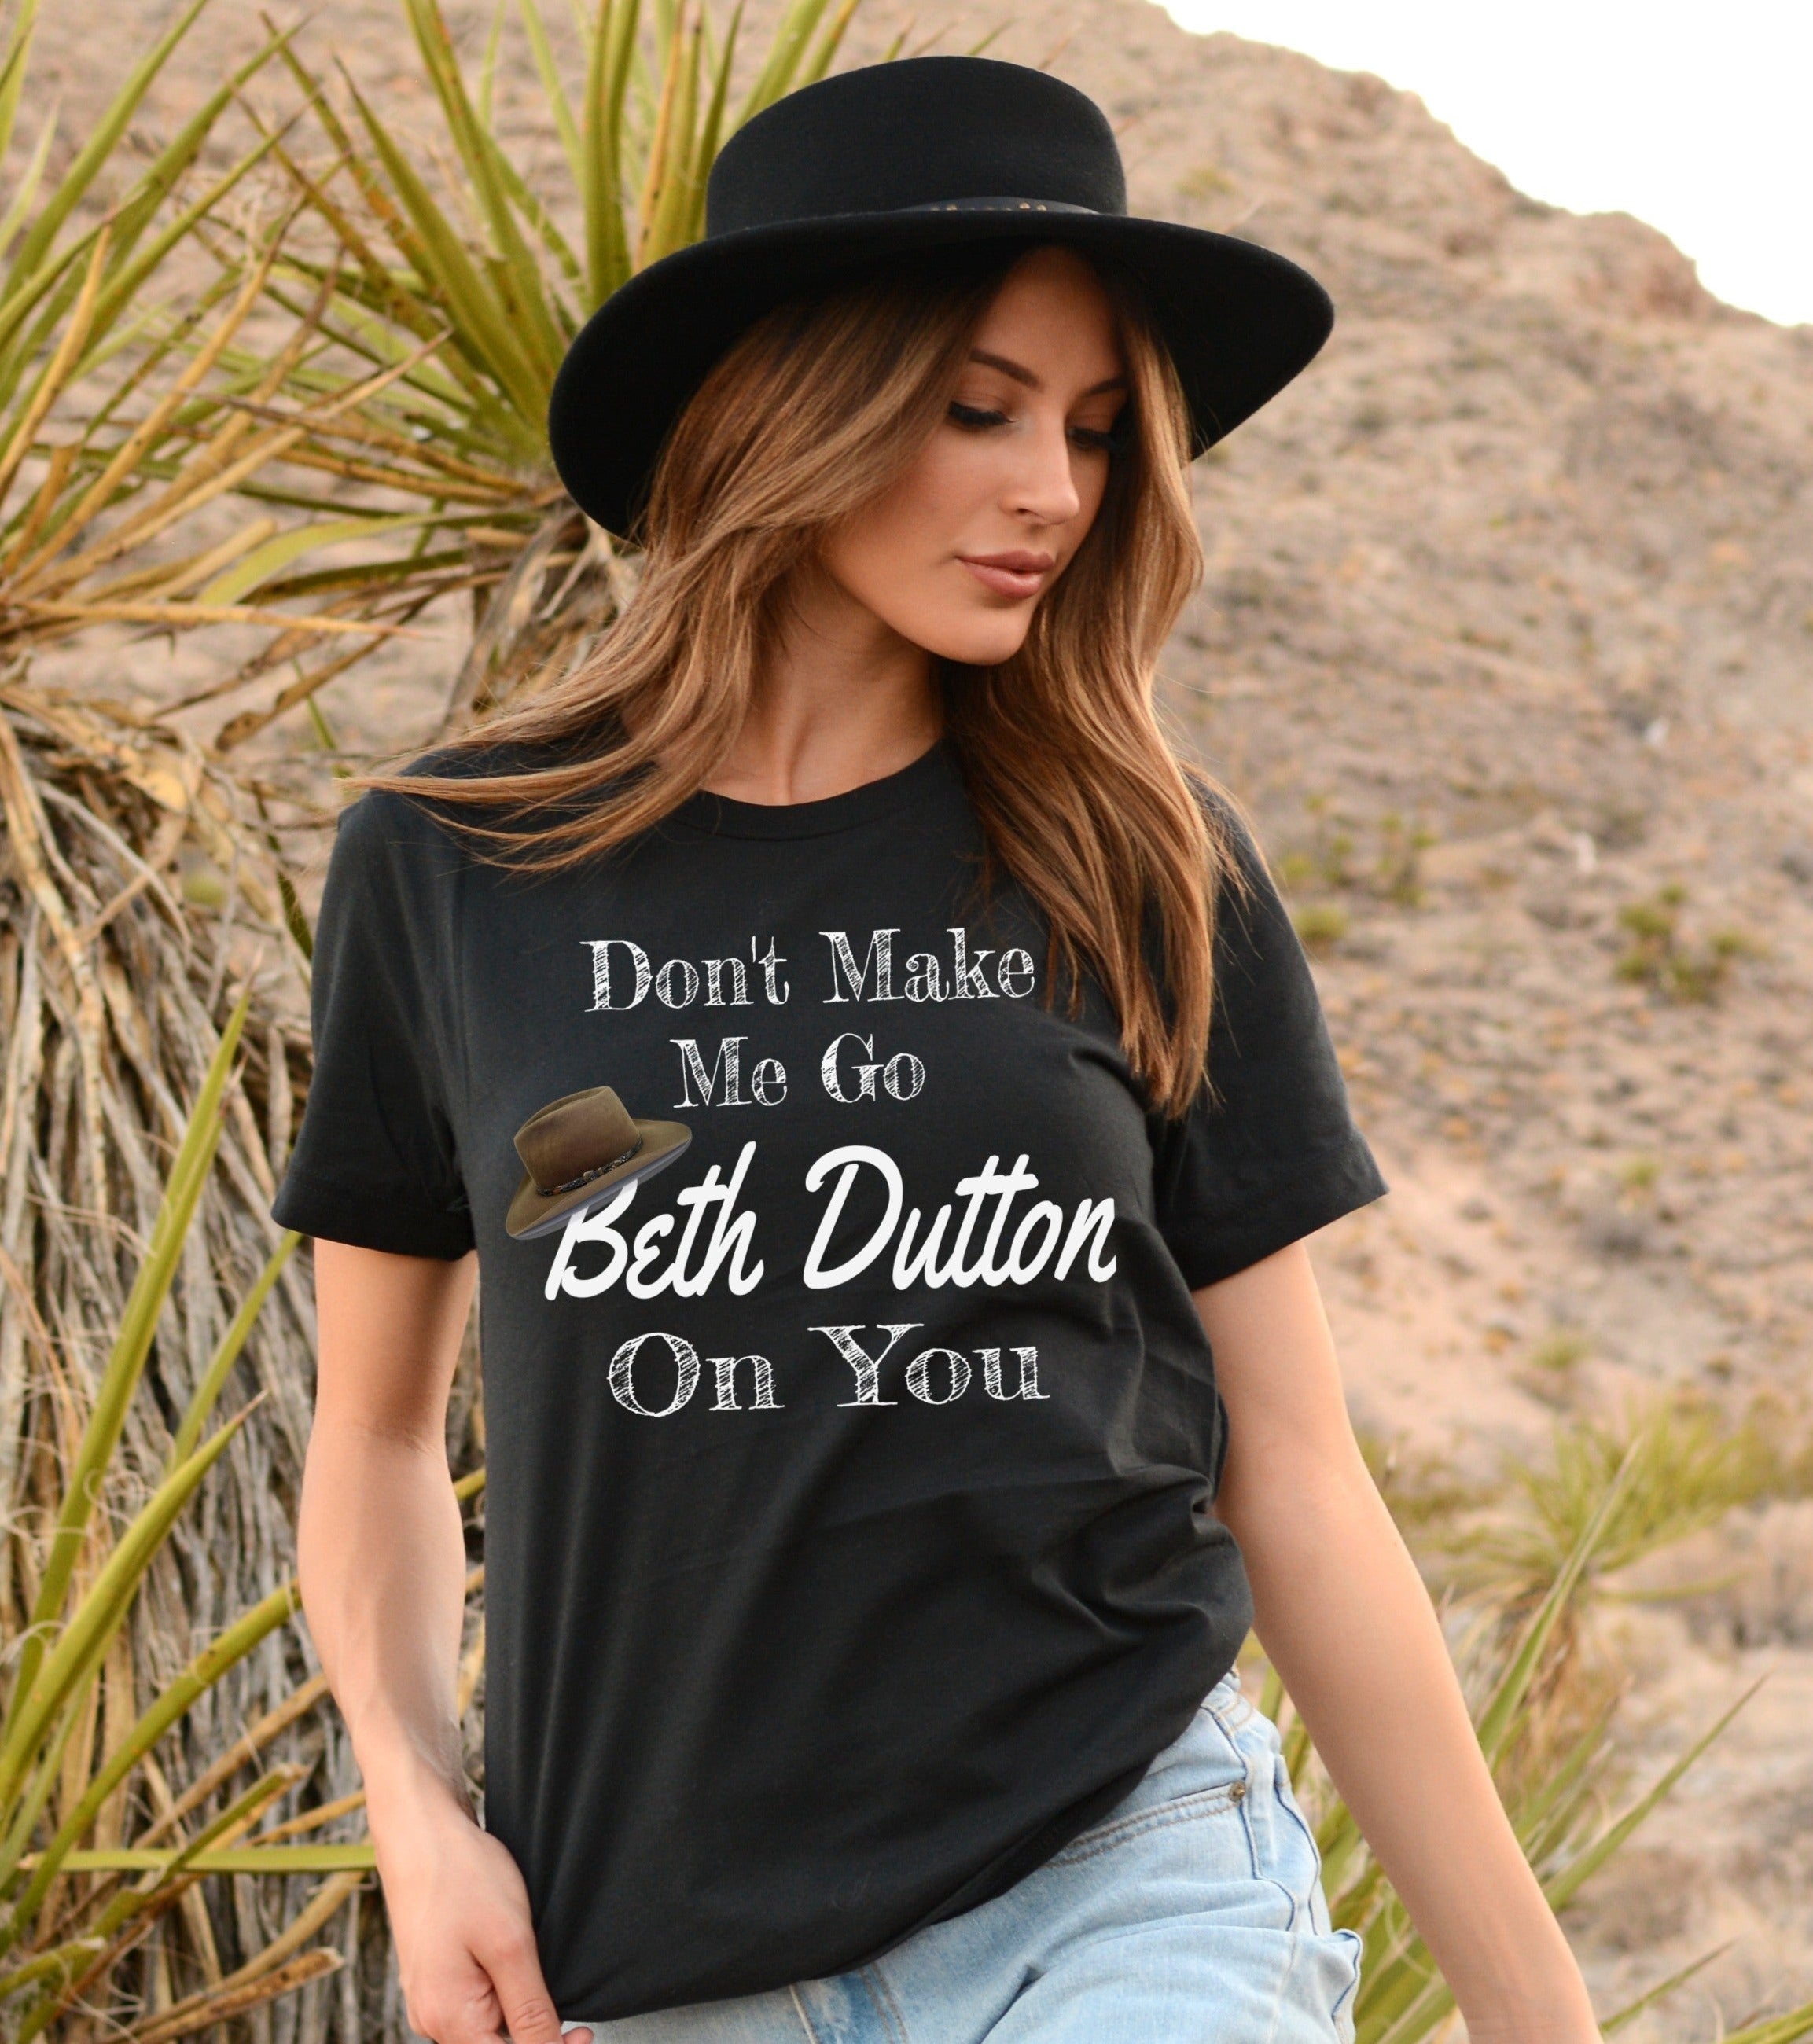 Beth Dutton T-Shirt